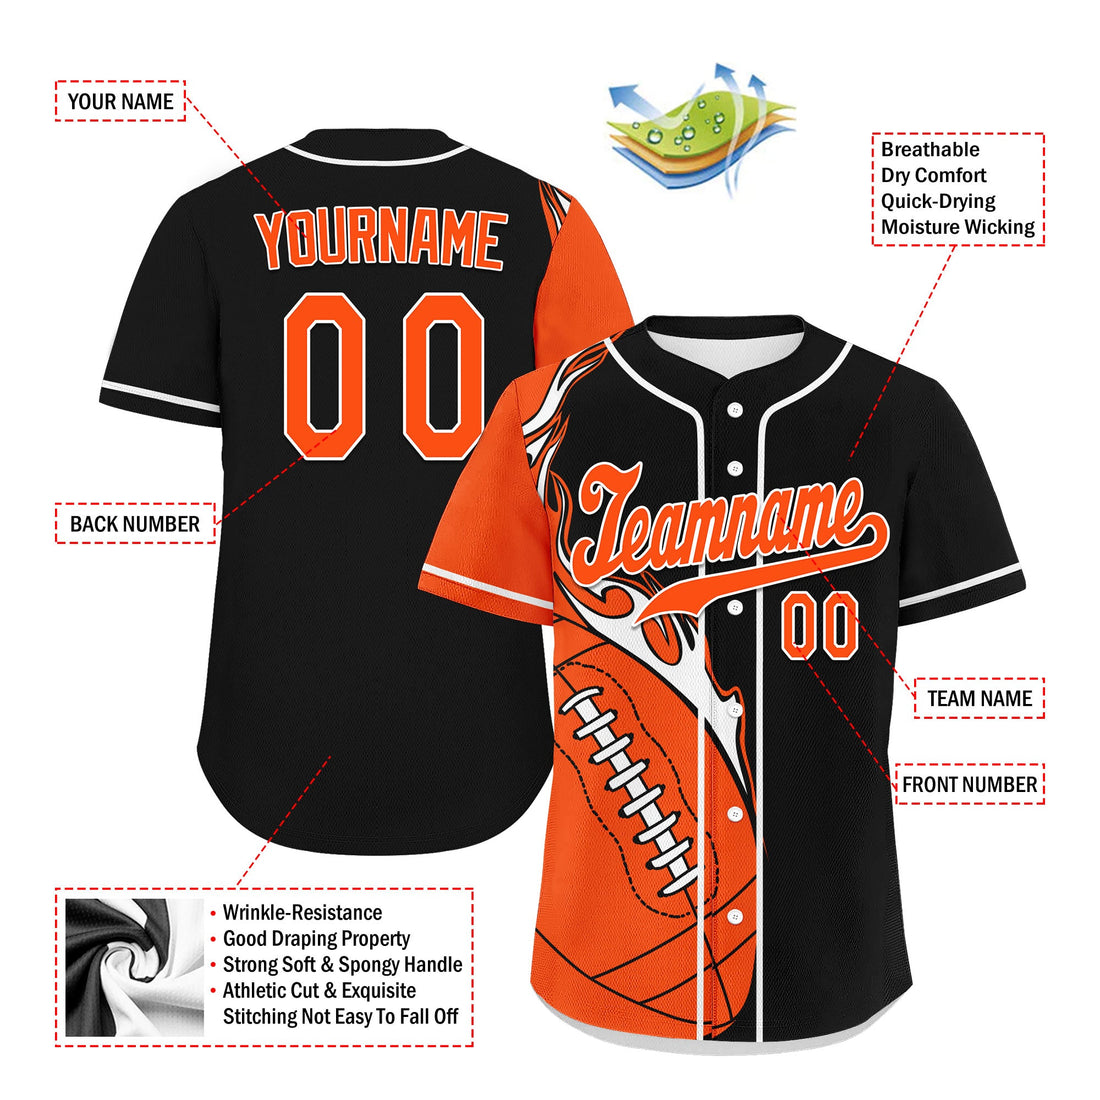 Custom Black Orange Classic Style Personalized Authentic Baseball Jersey UN002-D0b0a00-7